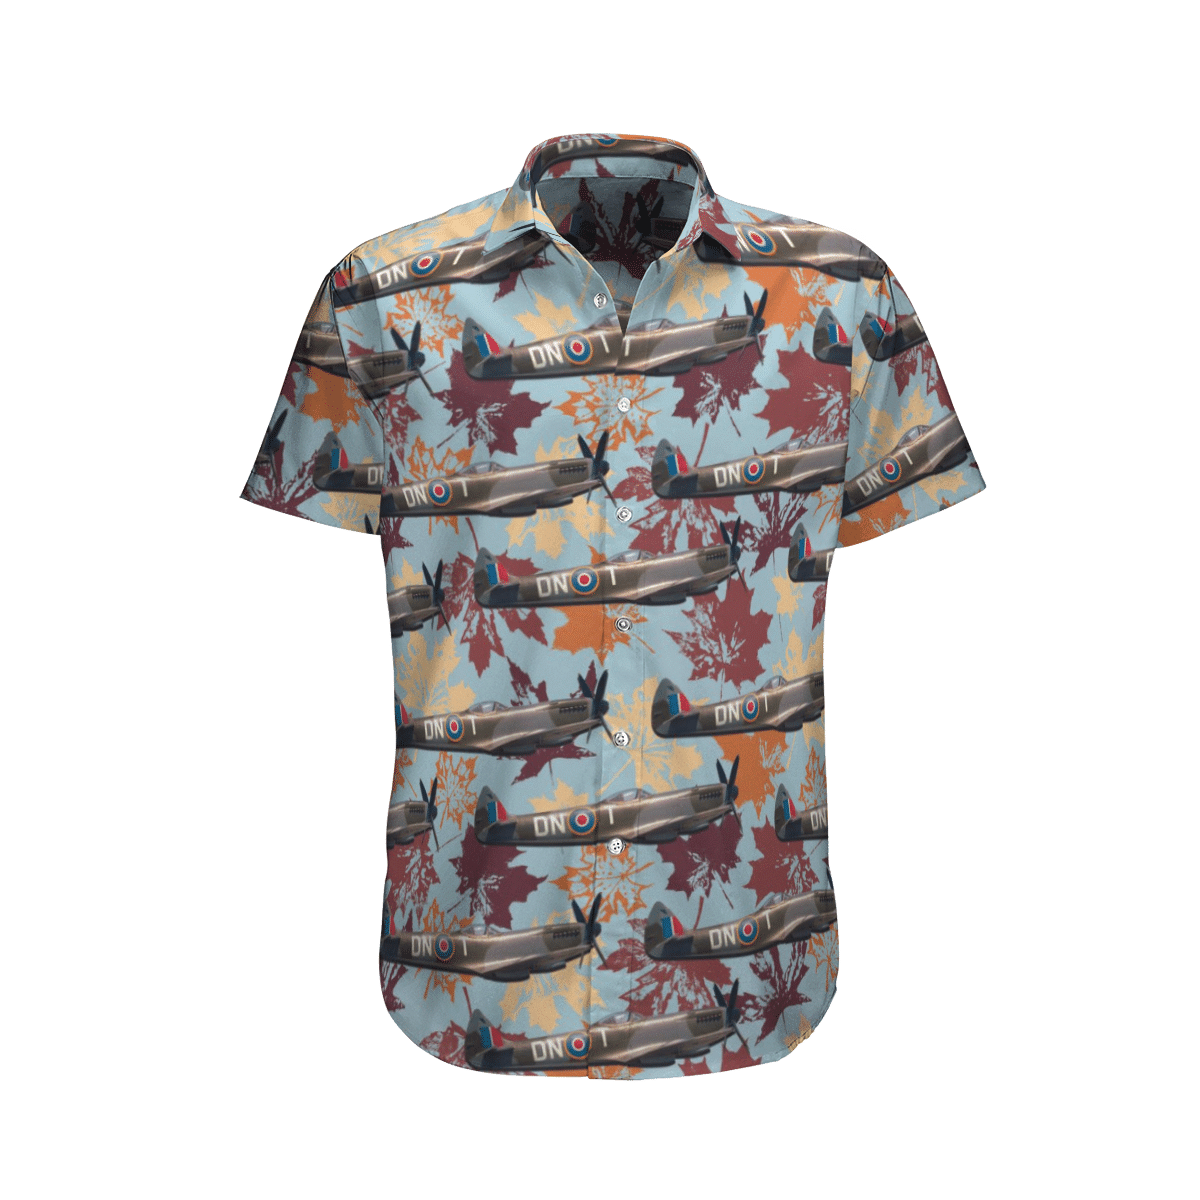 Get a new Hawaiian shirt to enjoy summer vacation 82